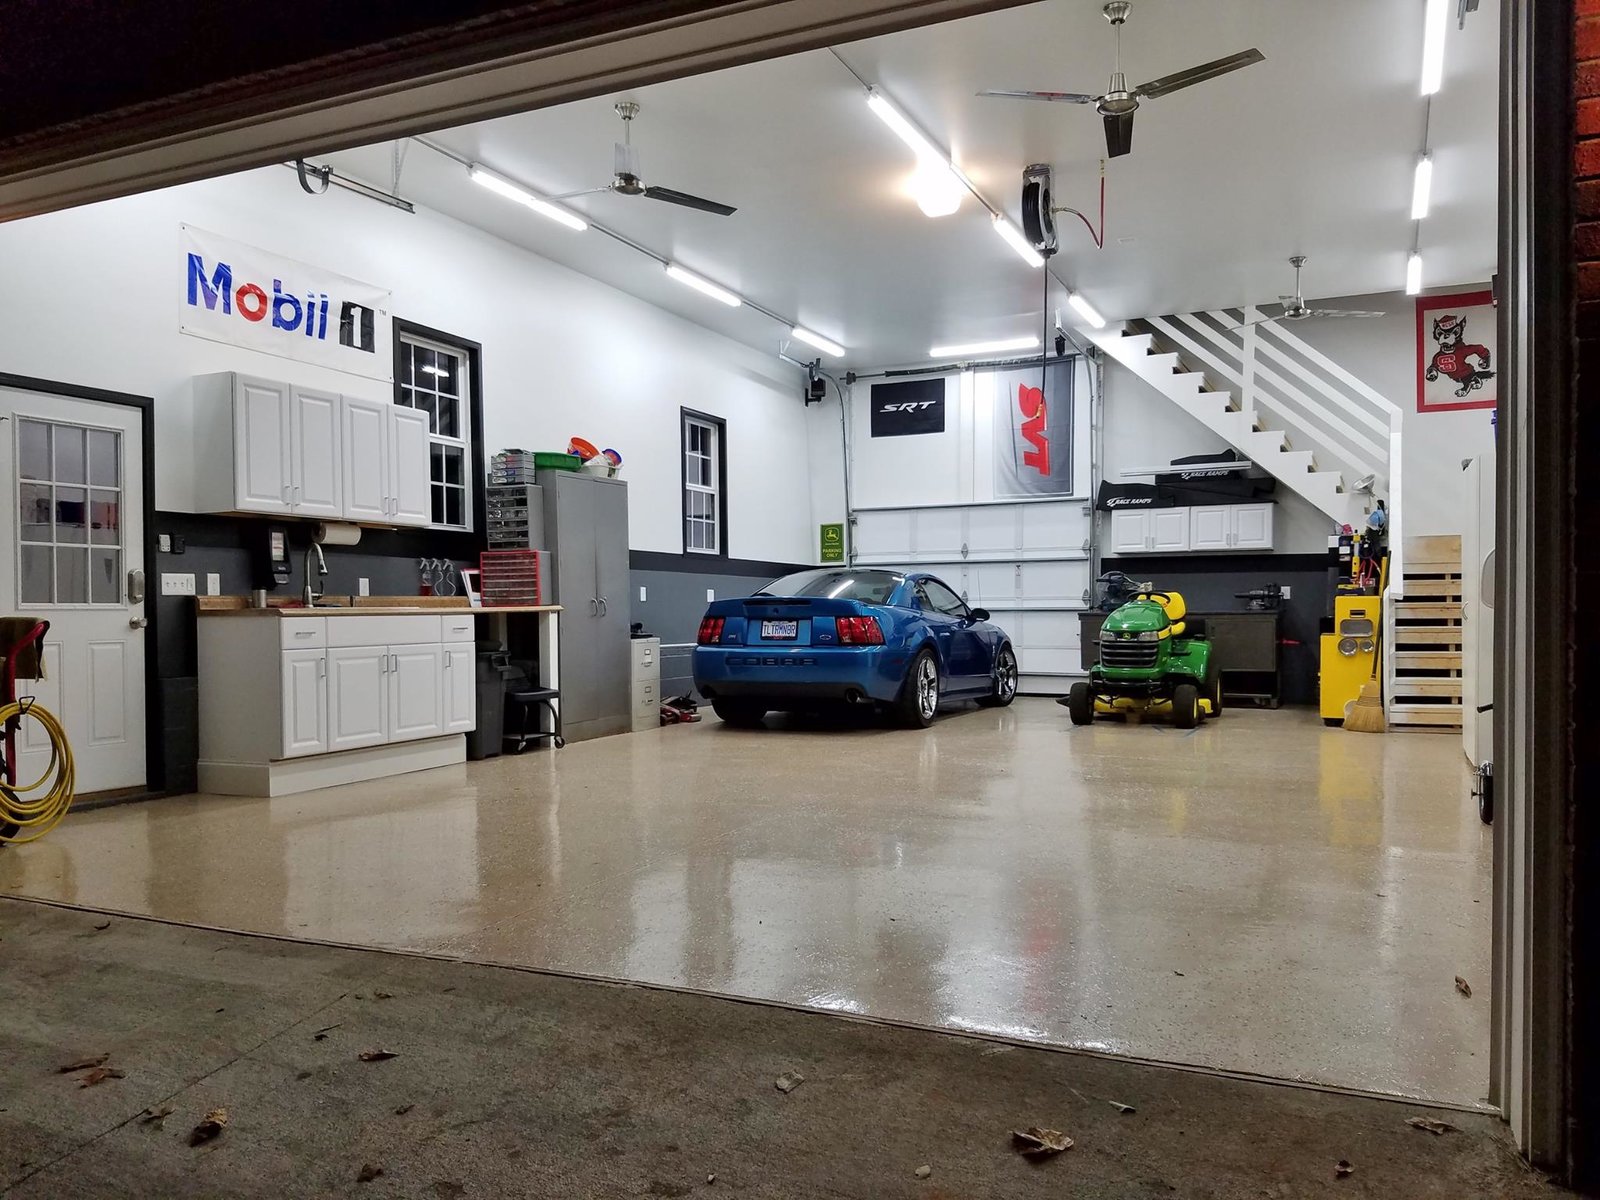 TT in Garage.jpg